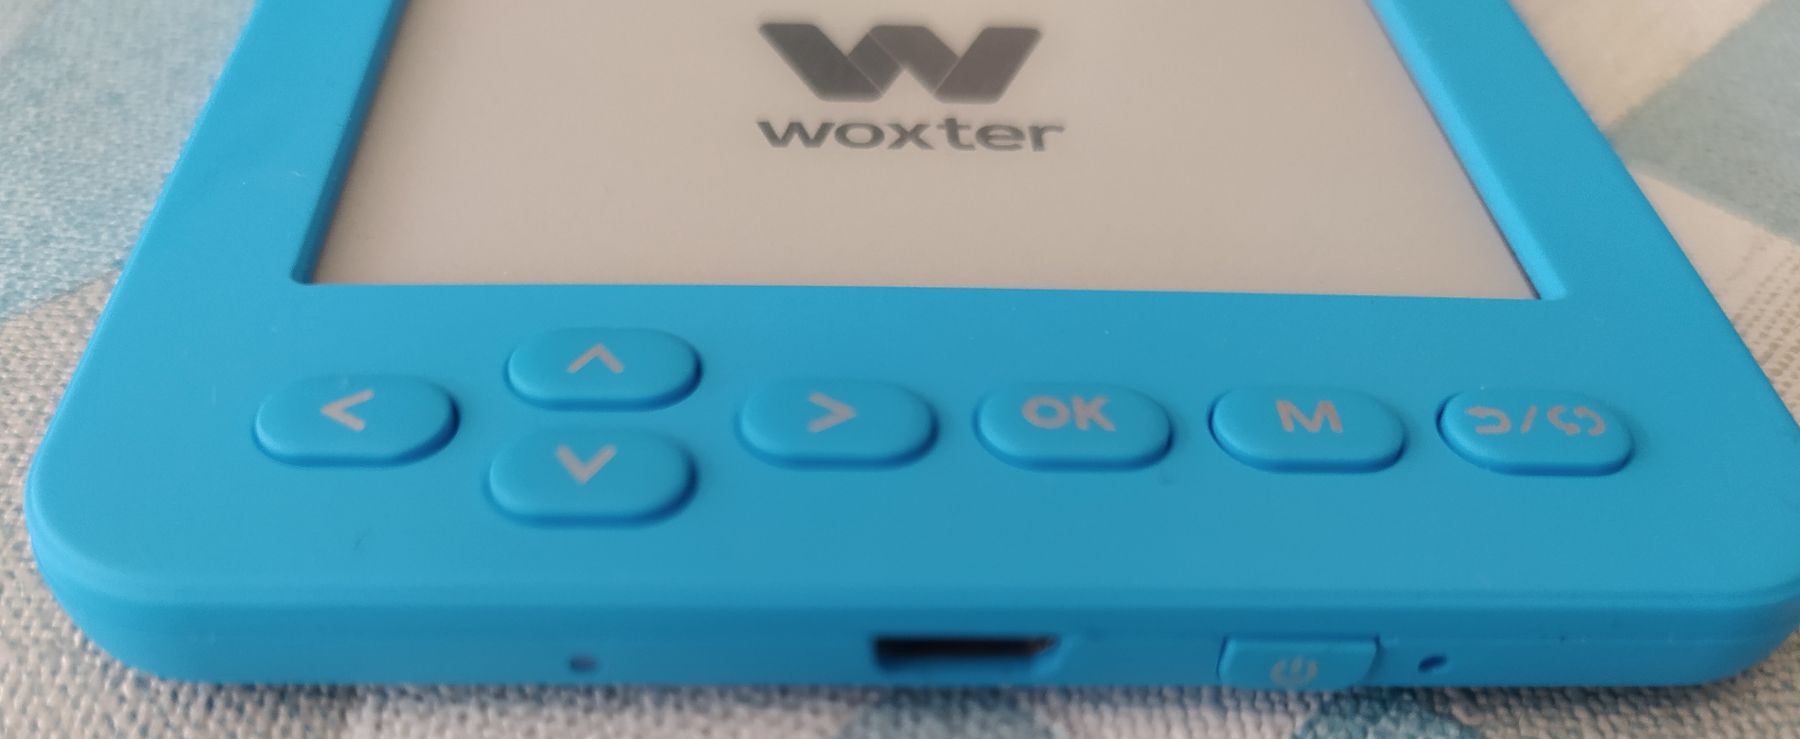 Woxter Scriba 195 S review